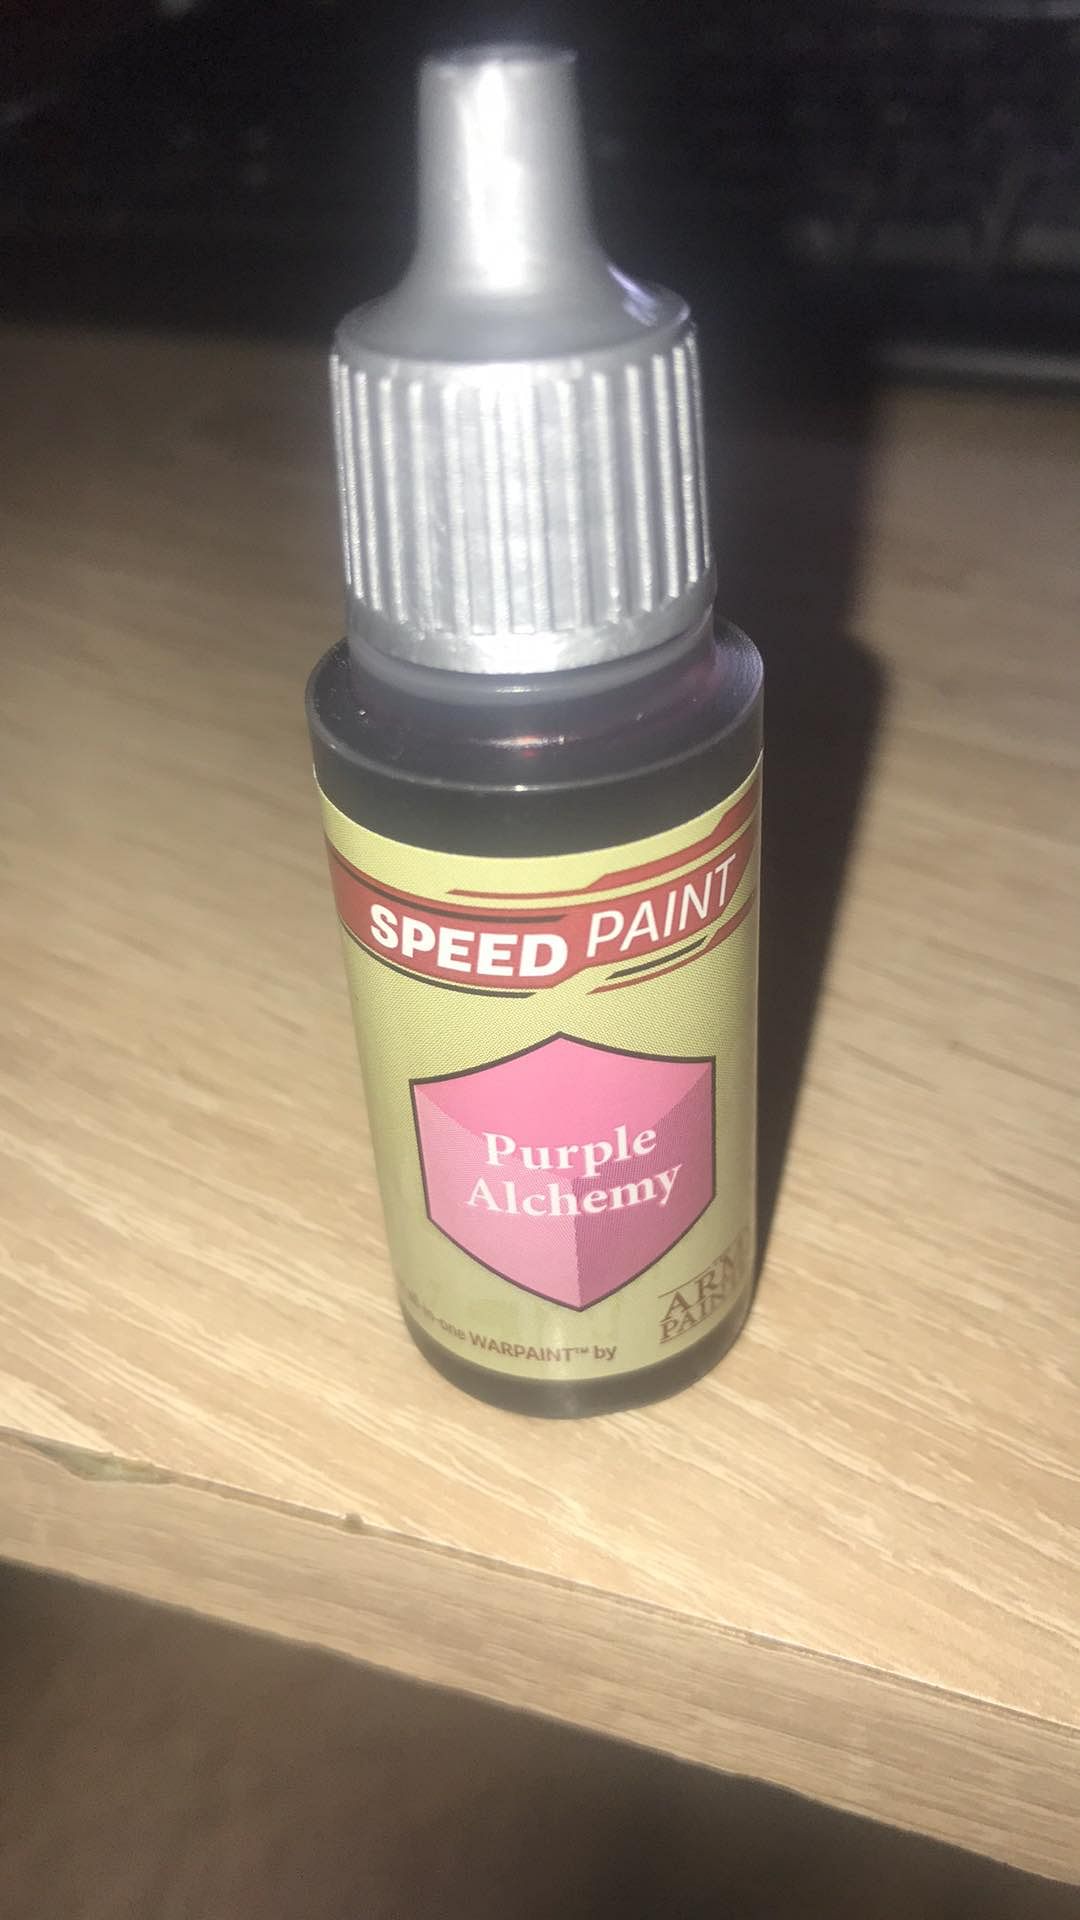 Speedpaint 18ml (The Army Painter) Purple Alchemy